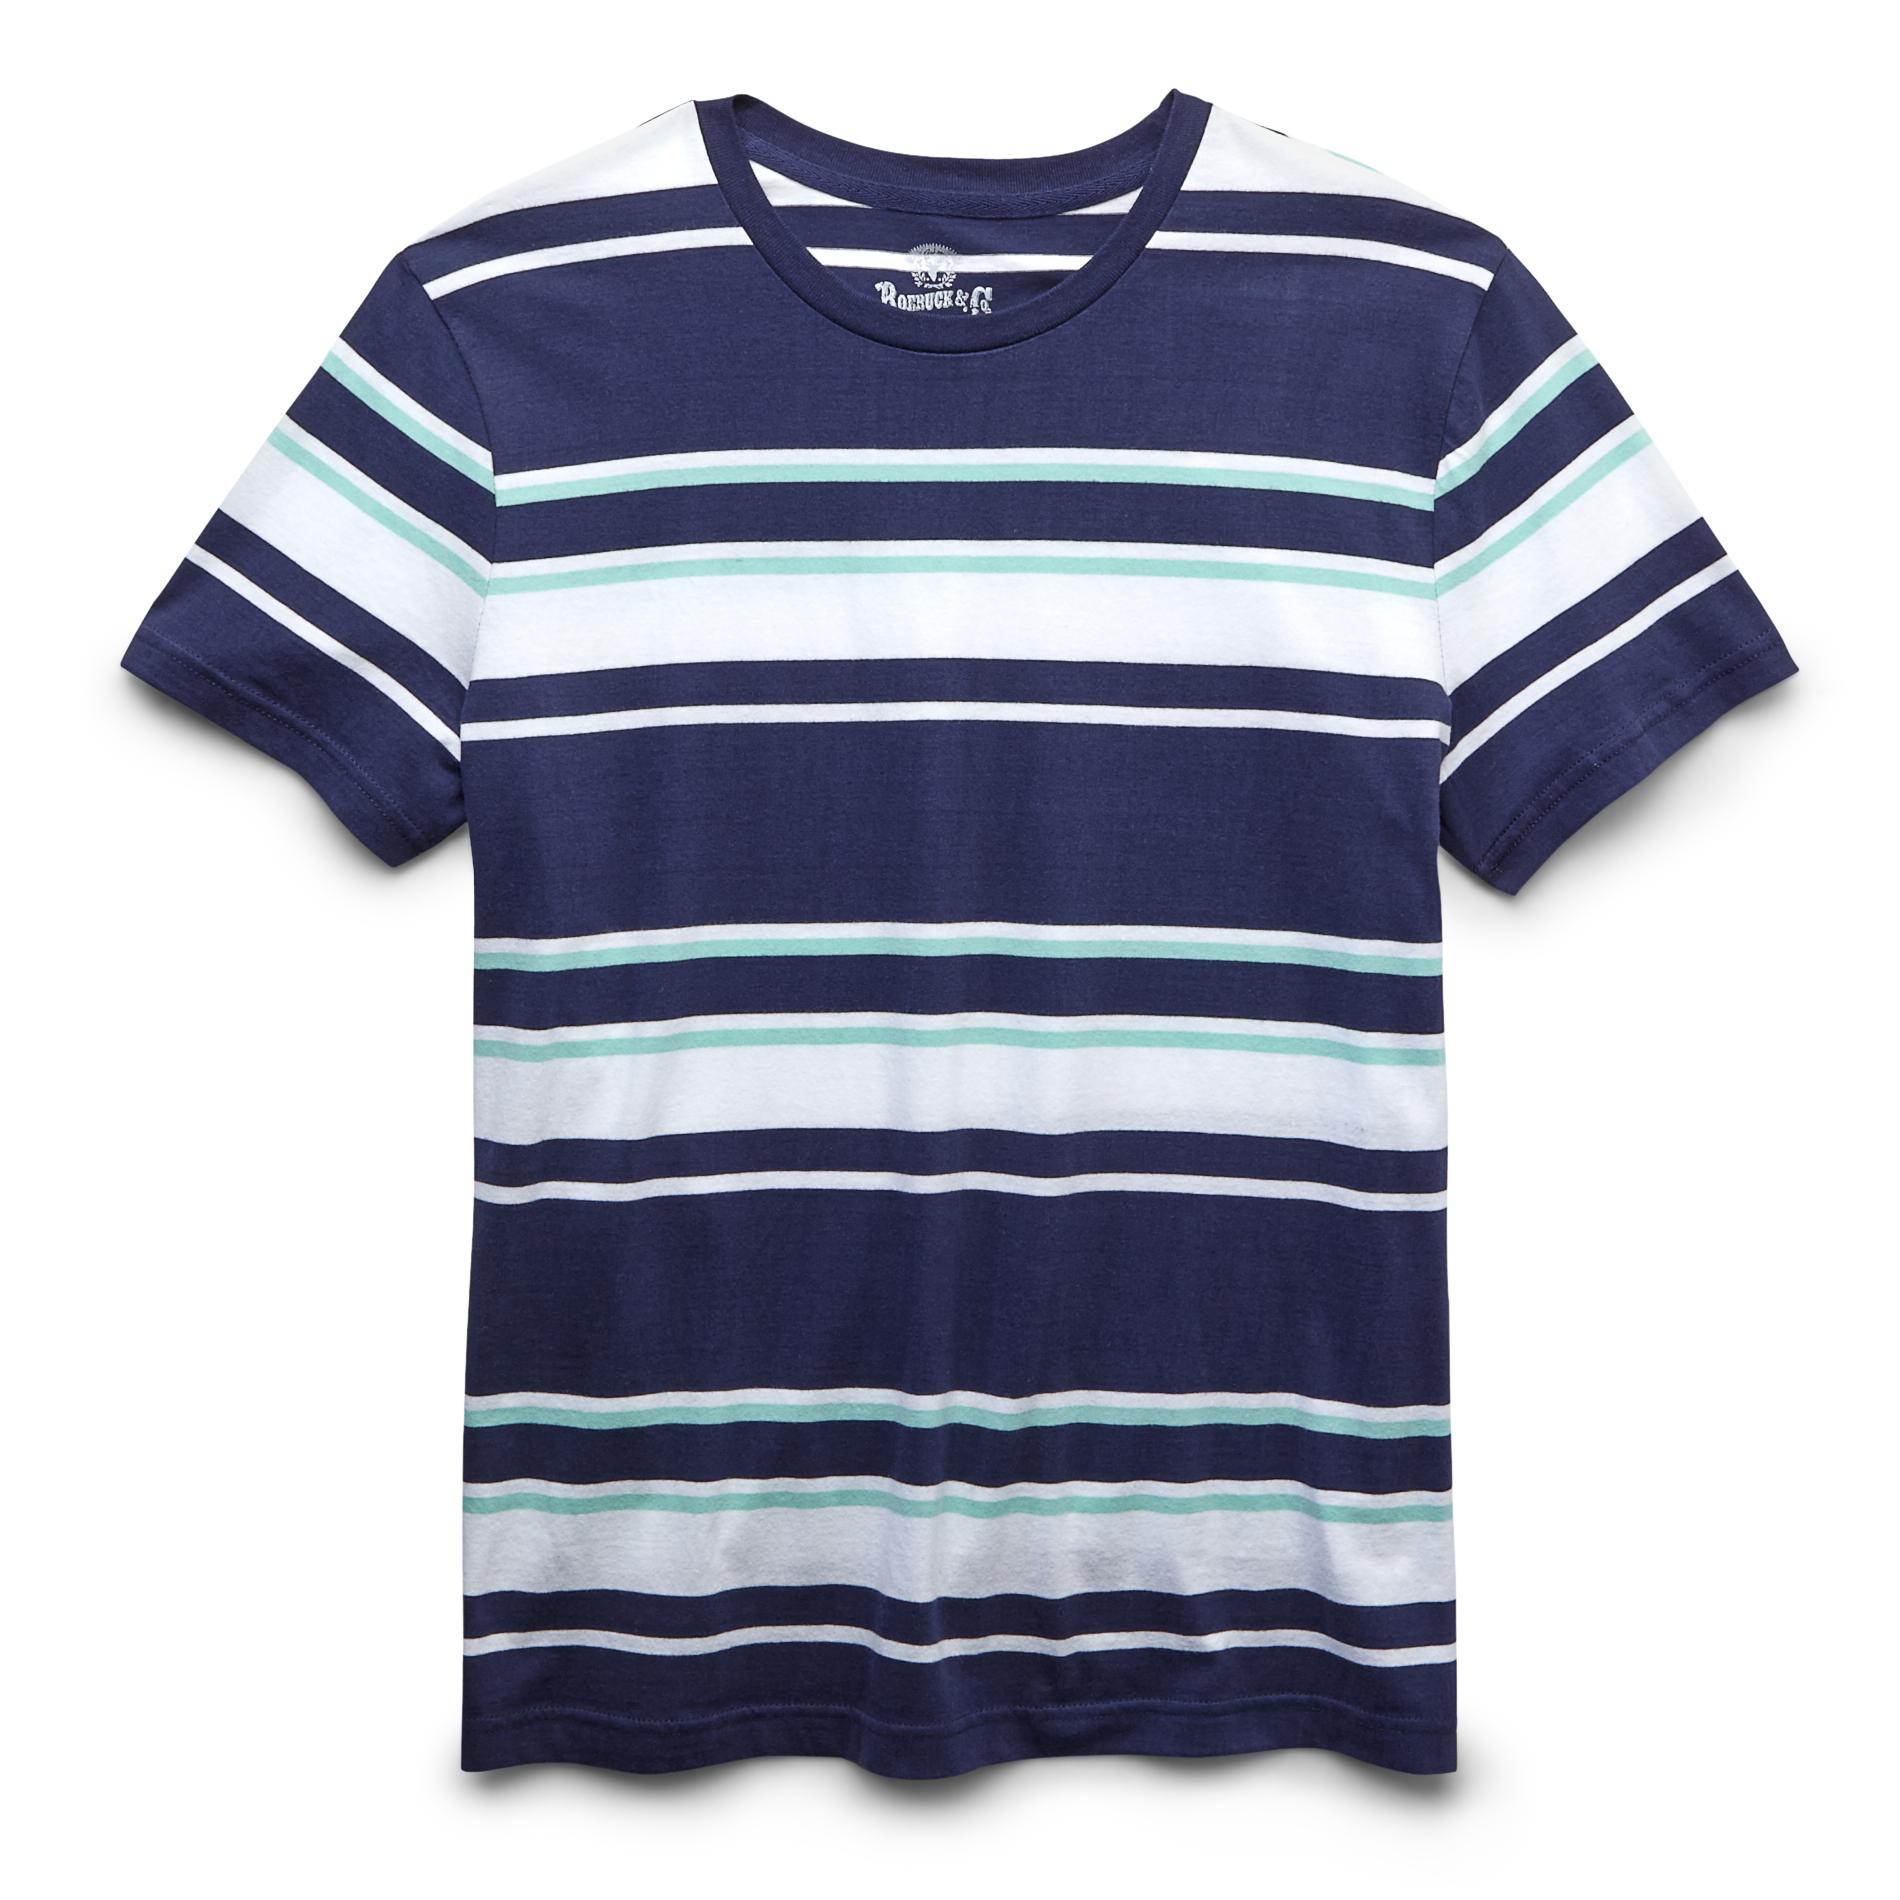 Roebuck & Co. Young Men's Brushed Cotton T-Shirt - Striped